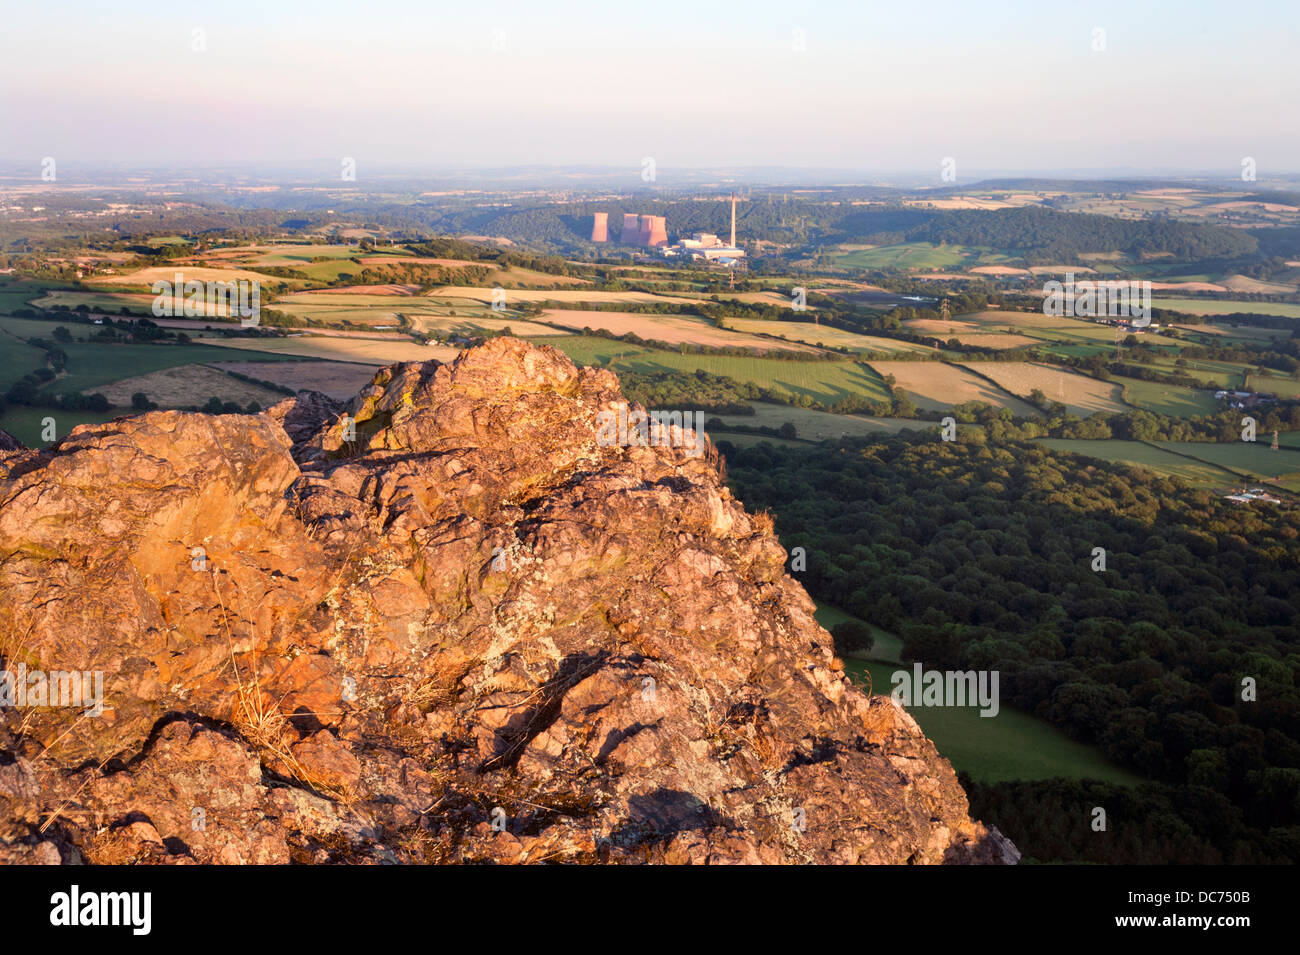 Ironbridge carbón Power Station, visto desde el Wrekin hill, Shropshire, RU Foto de stock